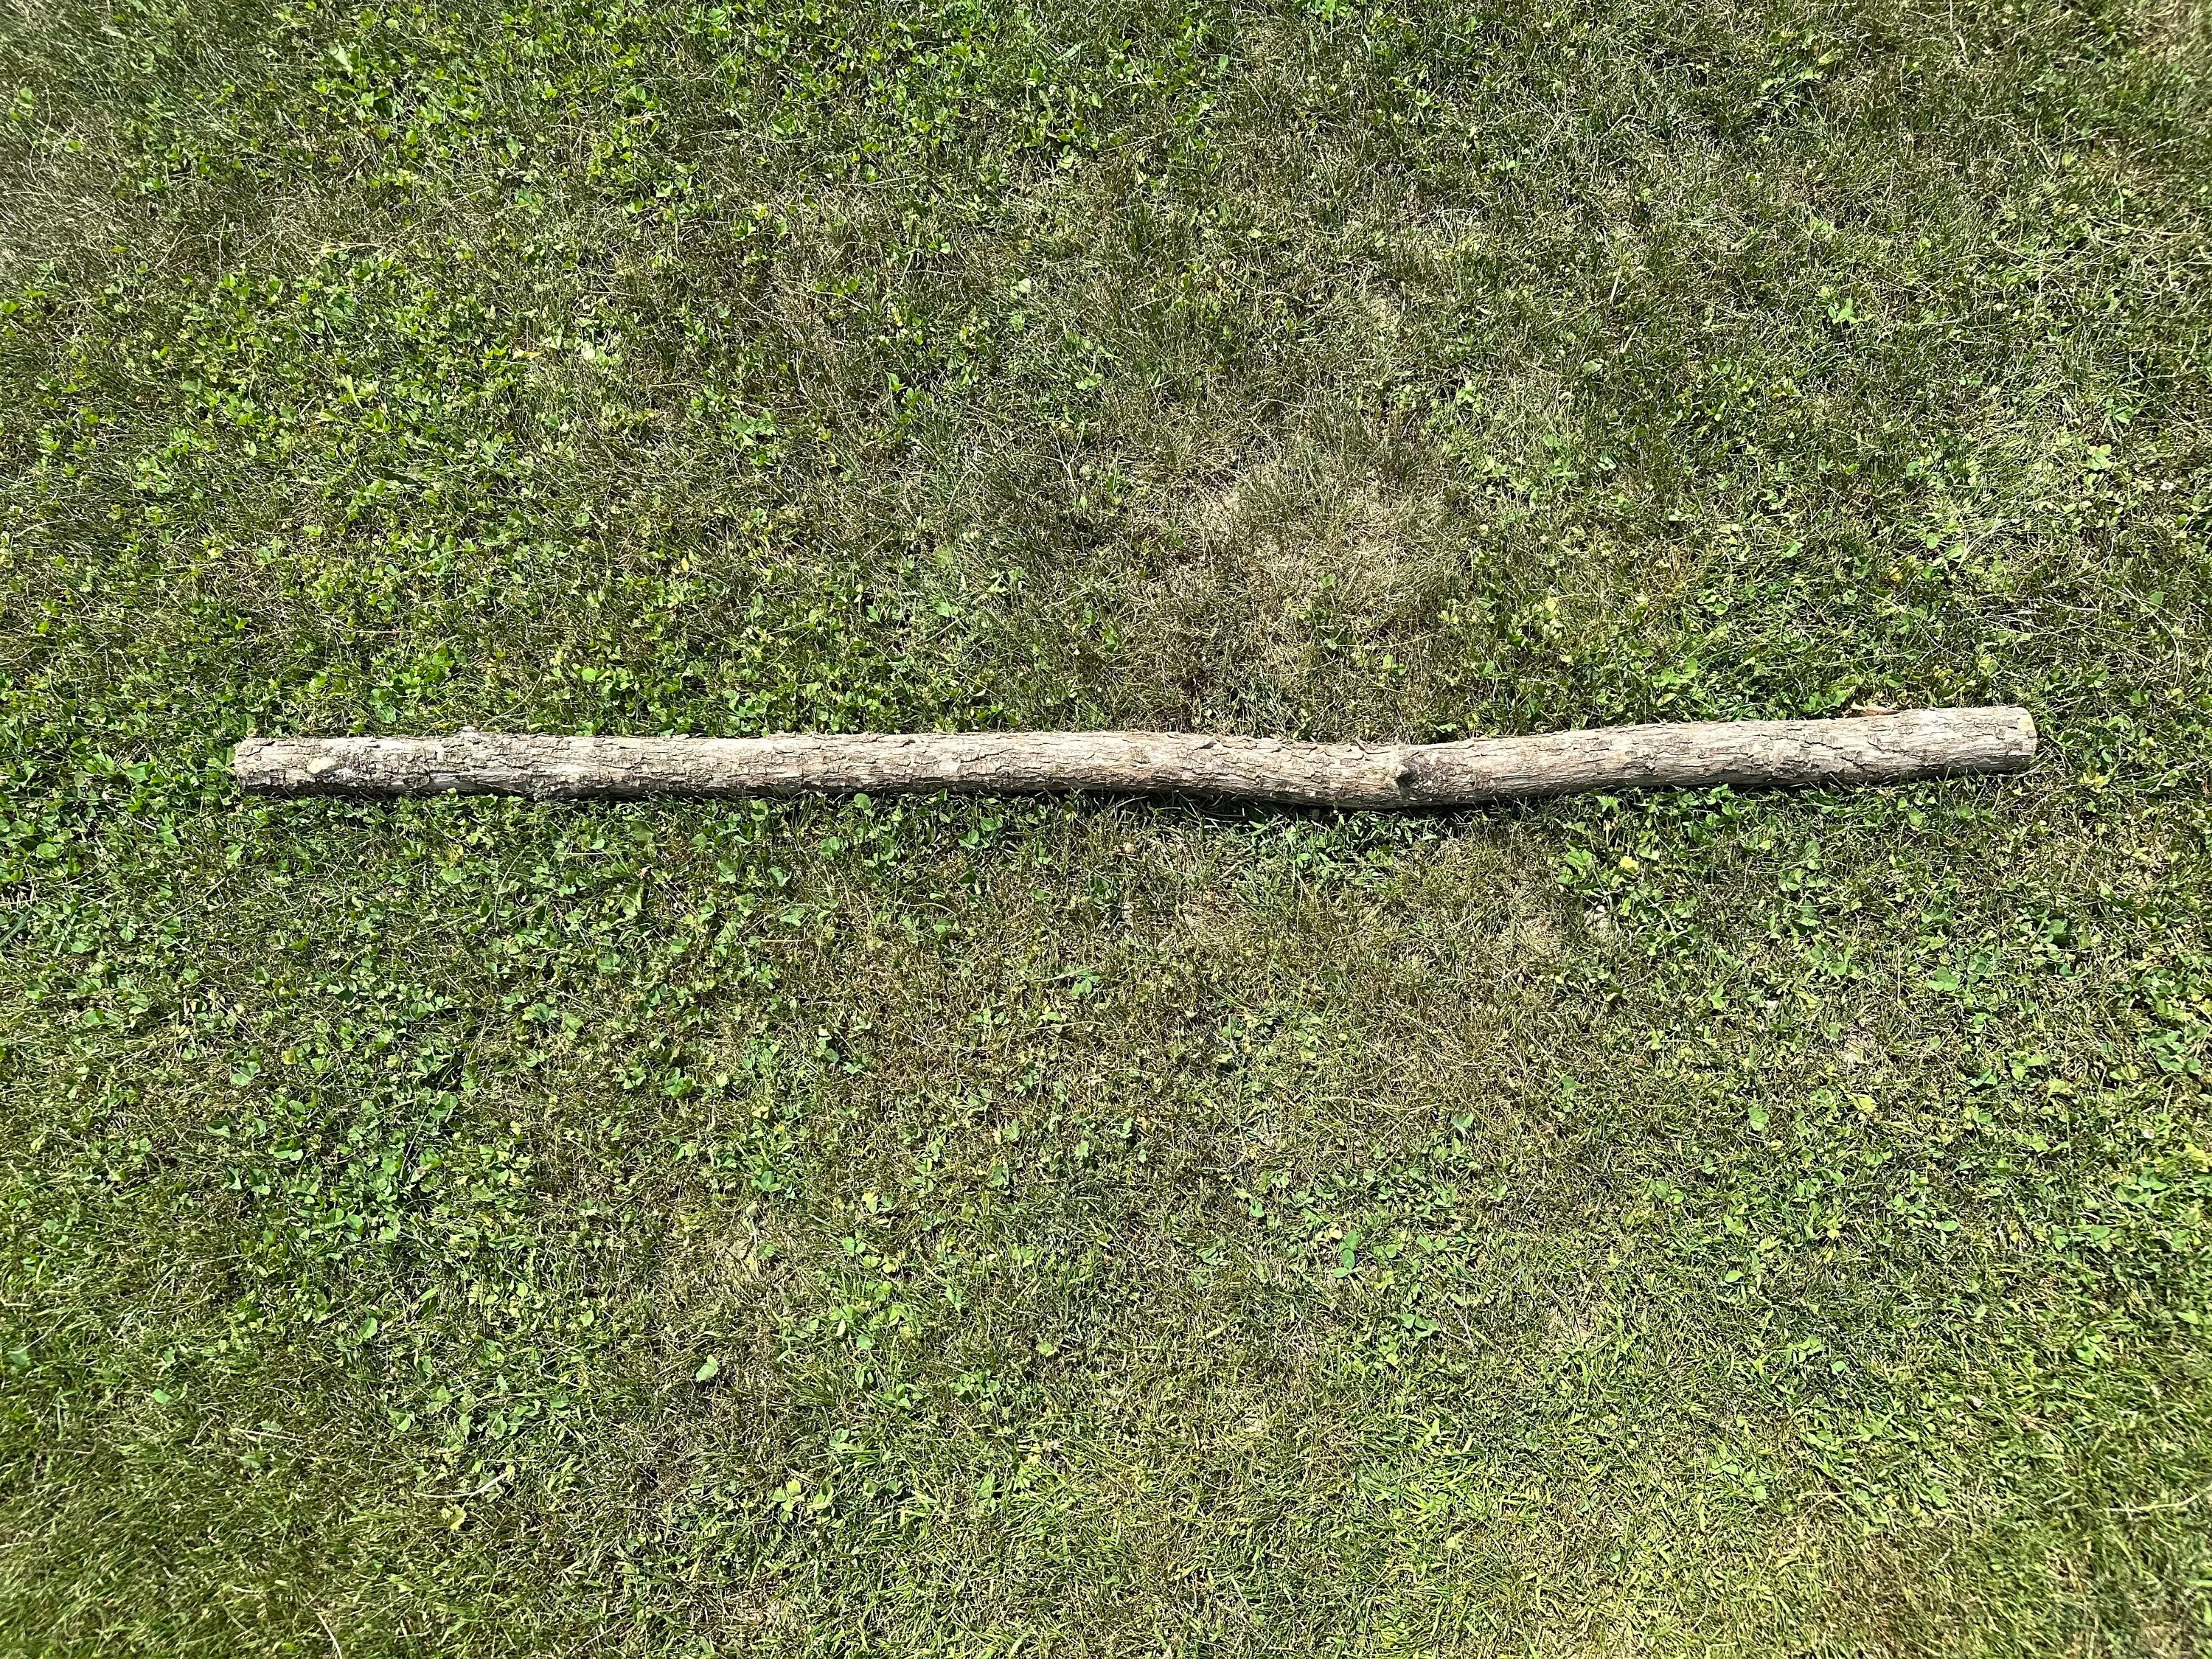 Ironwood Log, Walking Stick, Hophornbeam, 58 Inches Long